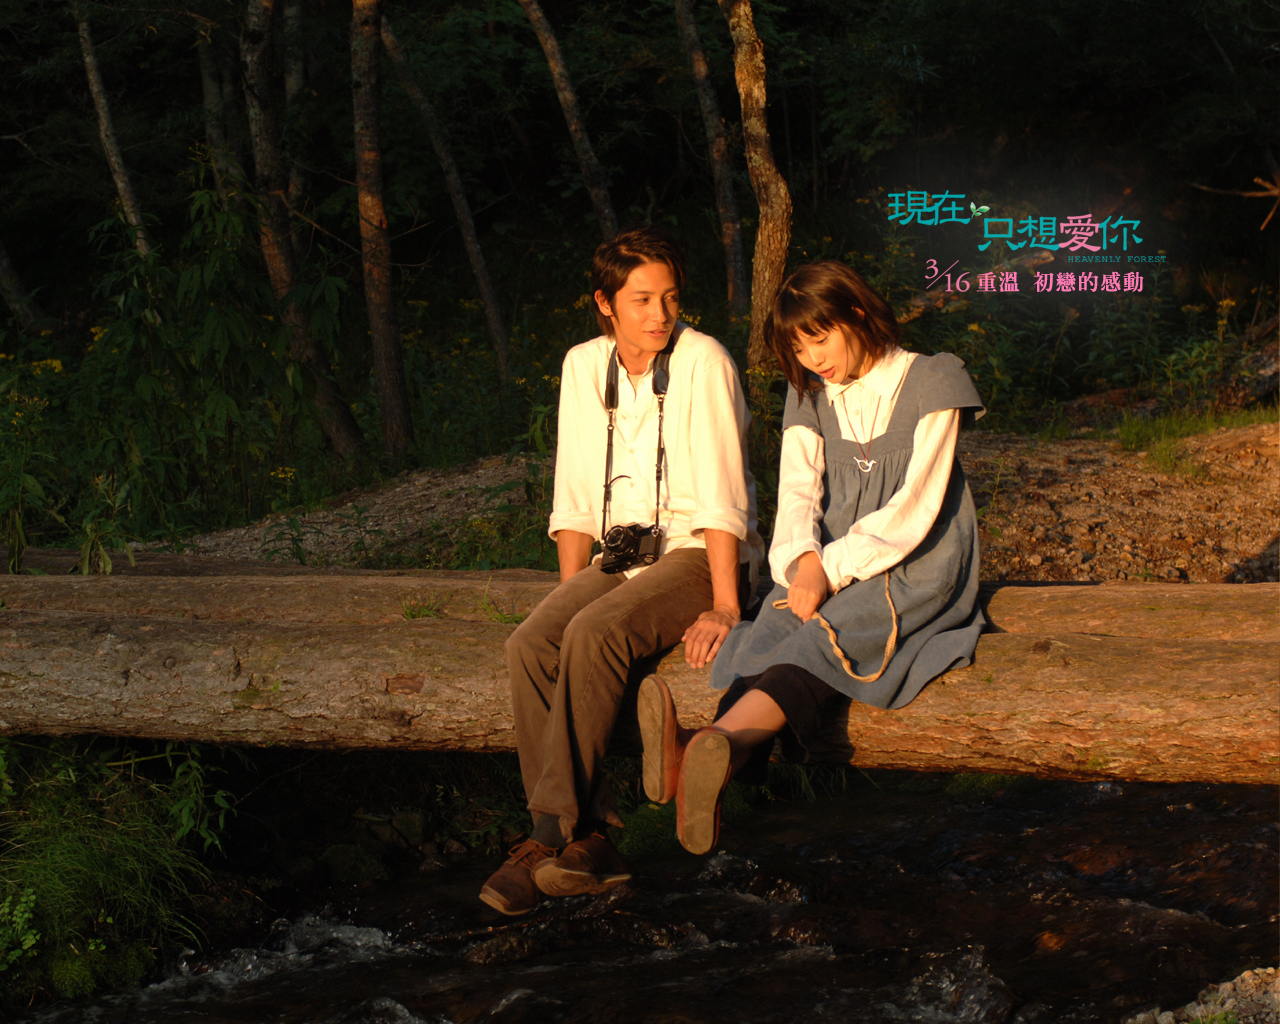 3d обои Макото и Сизуру, фильм Я просто люблю тебя / Tada, kimi wo aishiteru (Heavenly forest)  известные люди # 42063